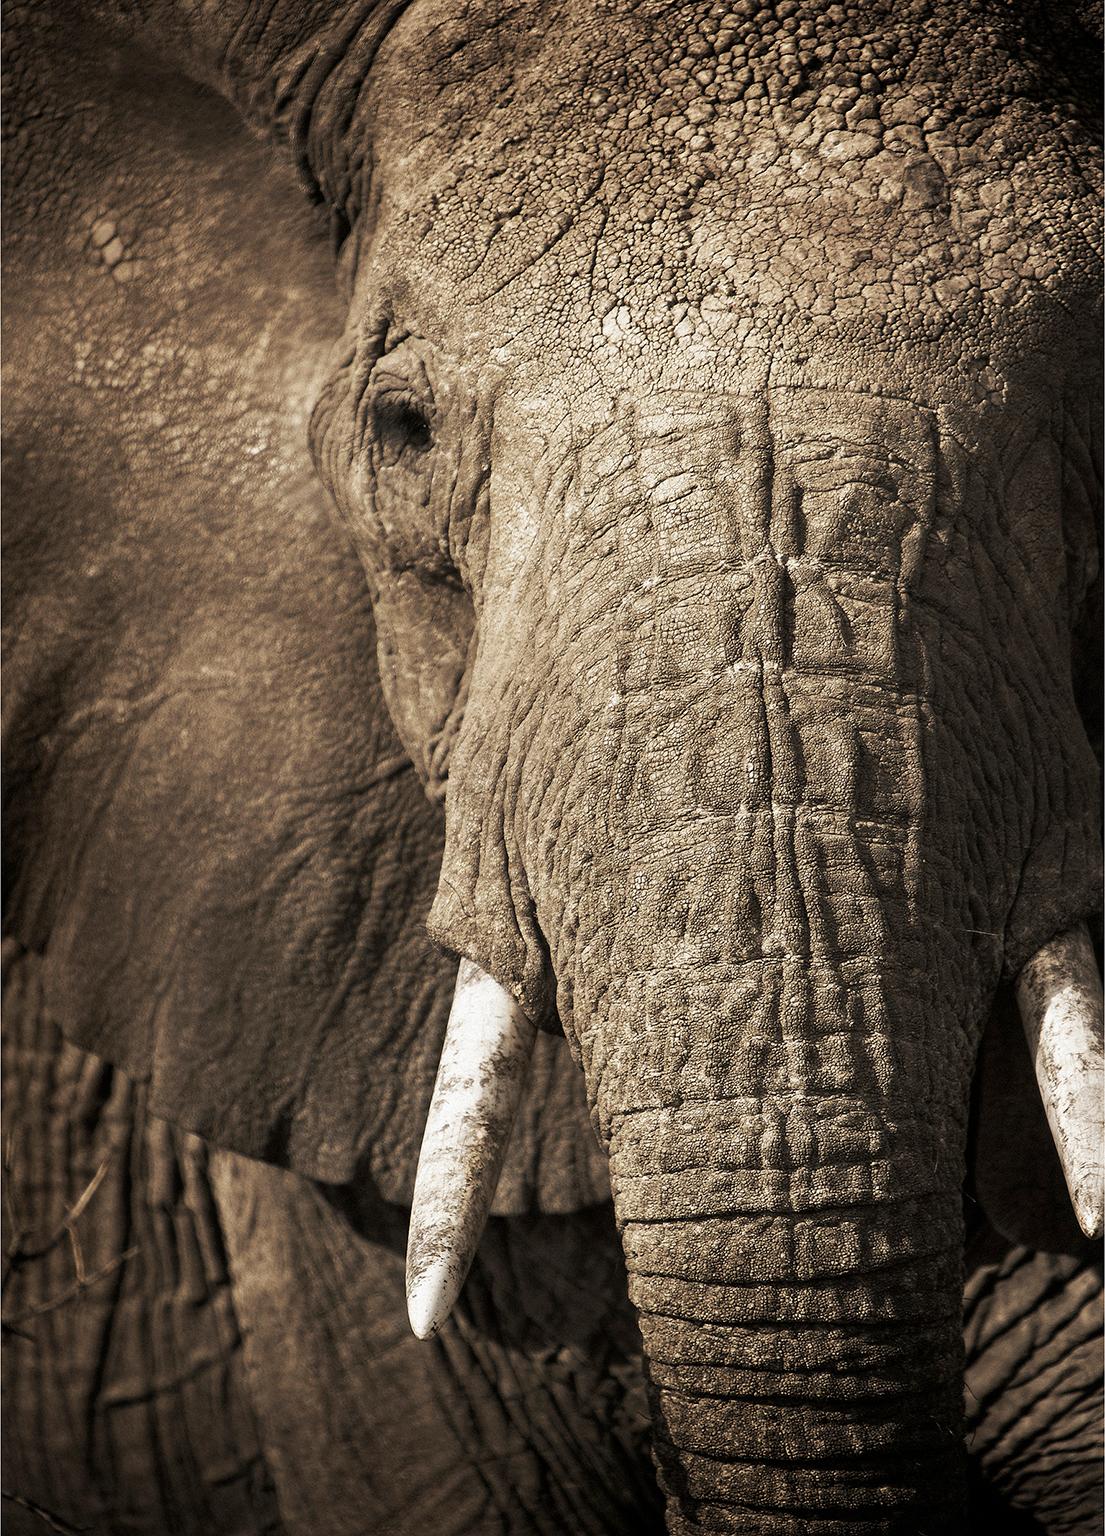 Chris Gordaneer Black and White Photograph – Elephant-04, Namibia.